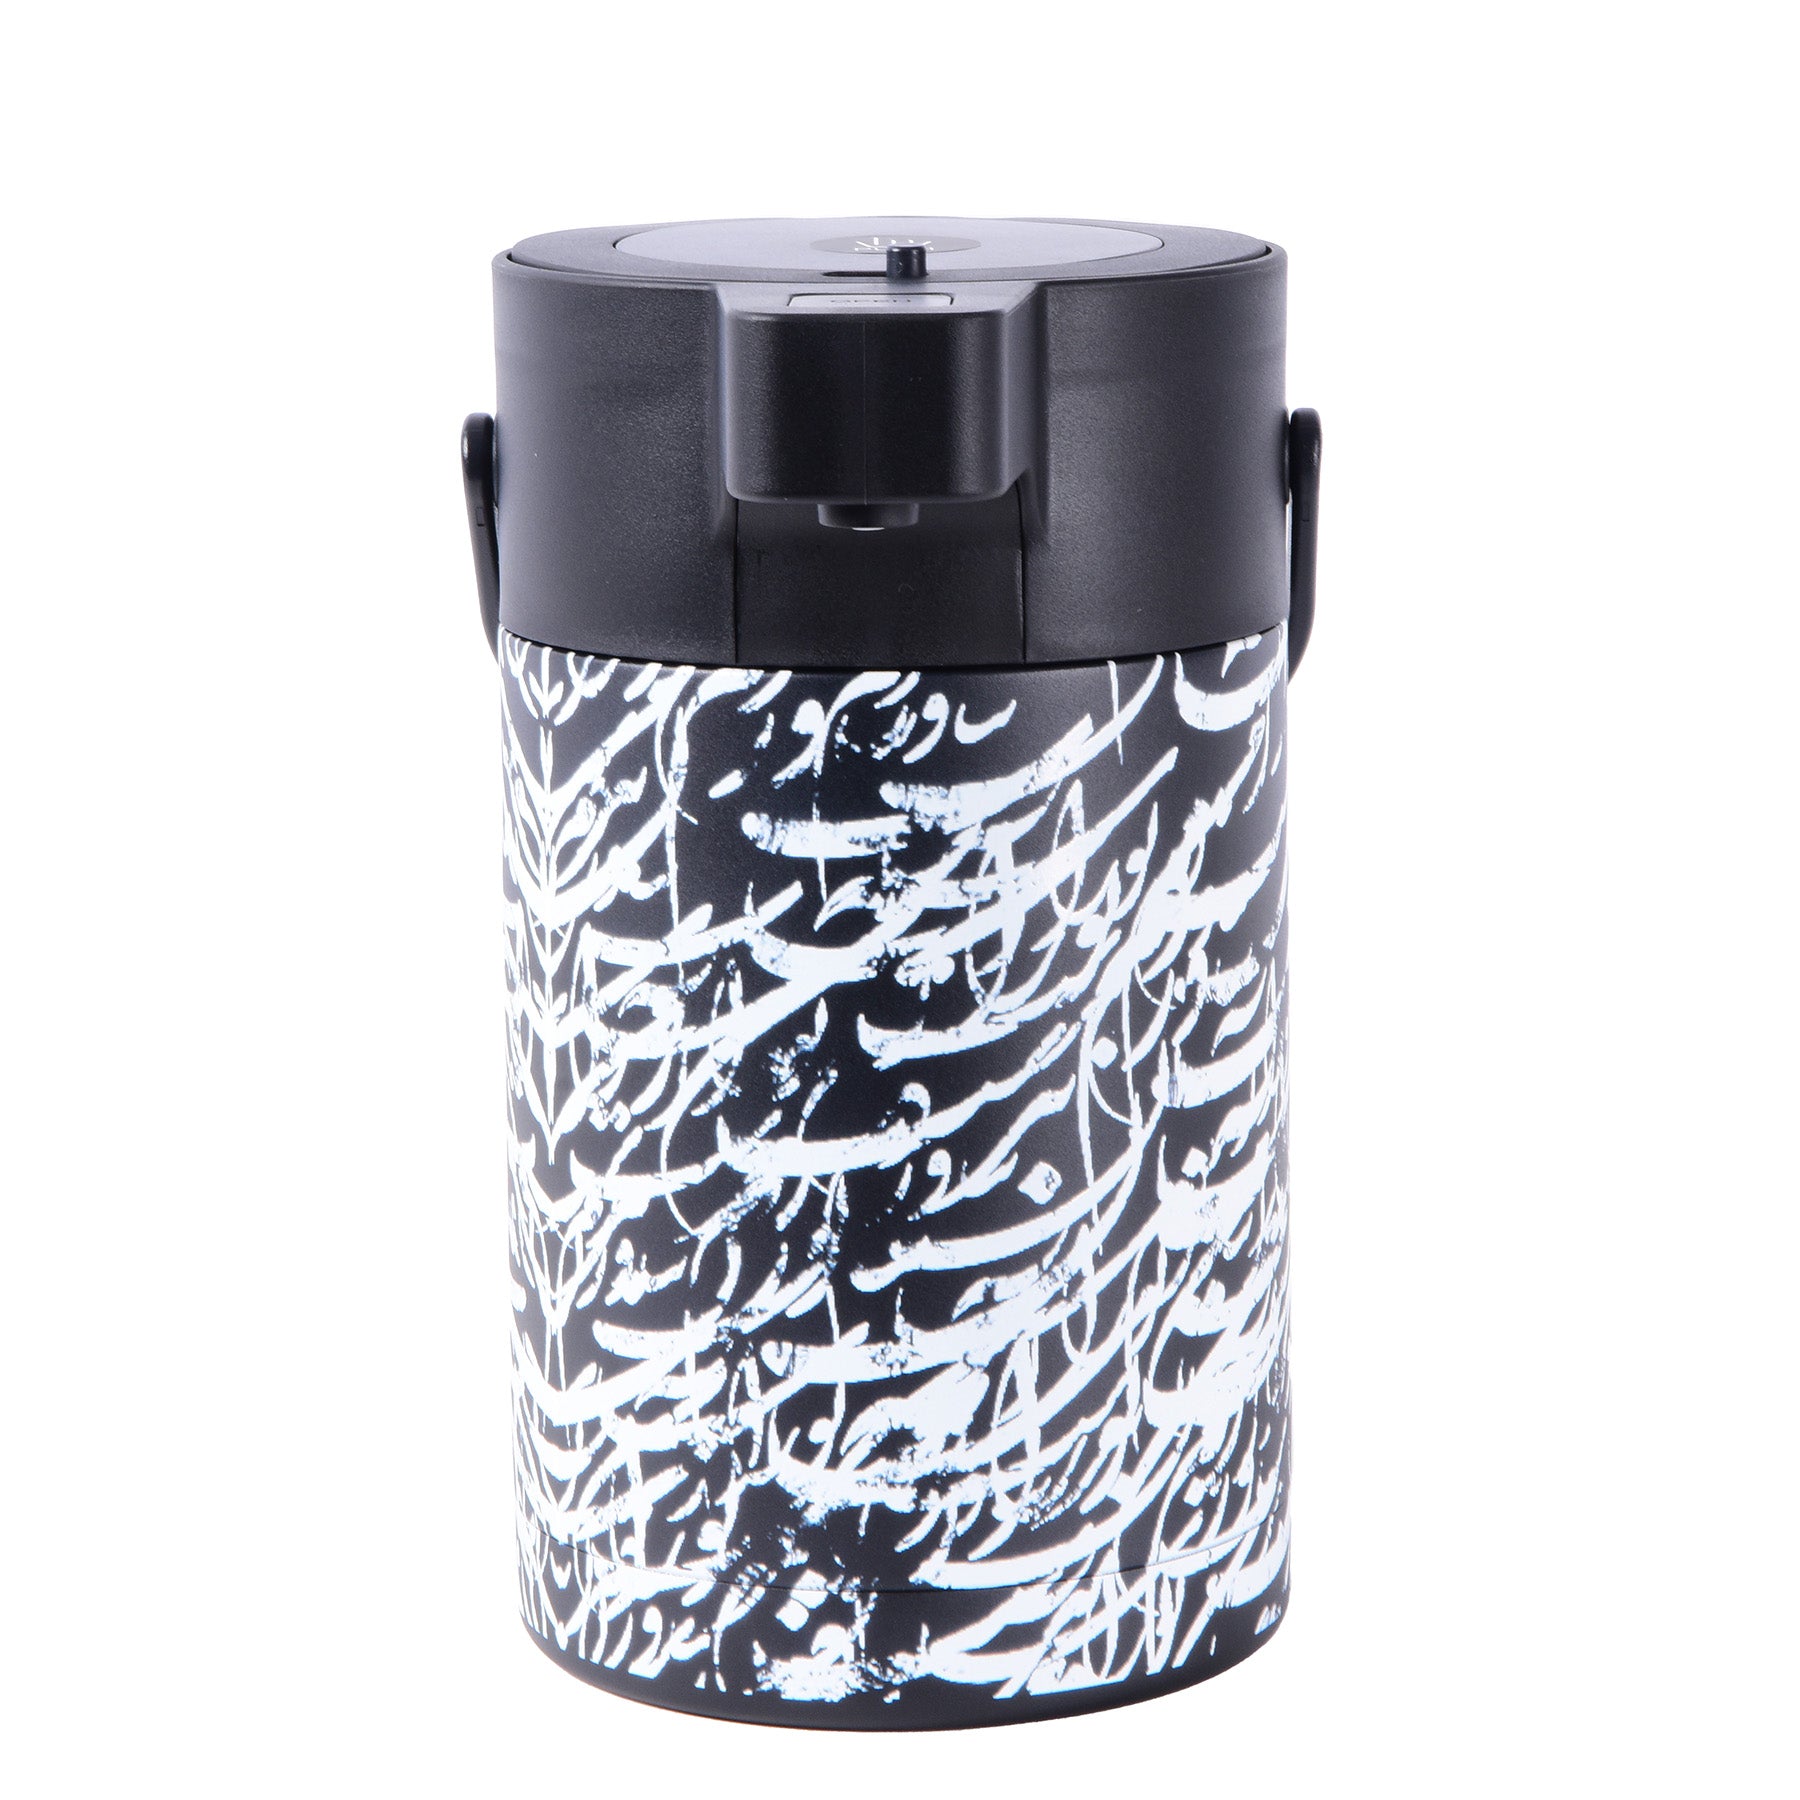 Zwarah Air Pot Flask 2.5 liters Black Color